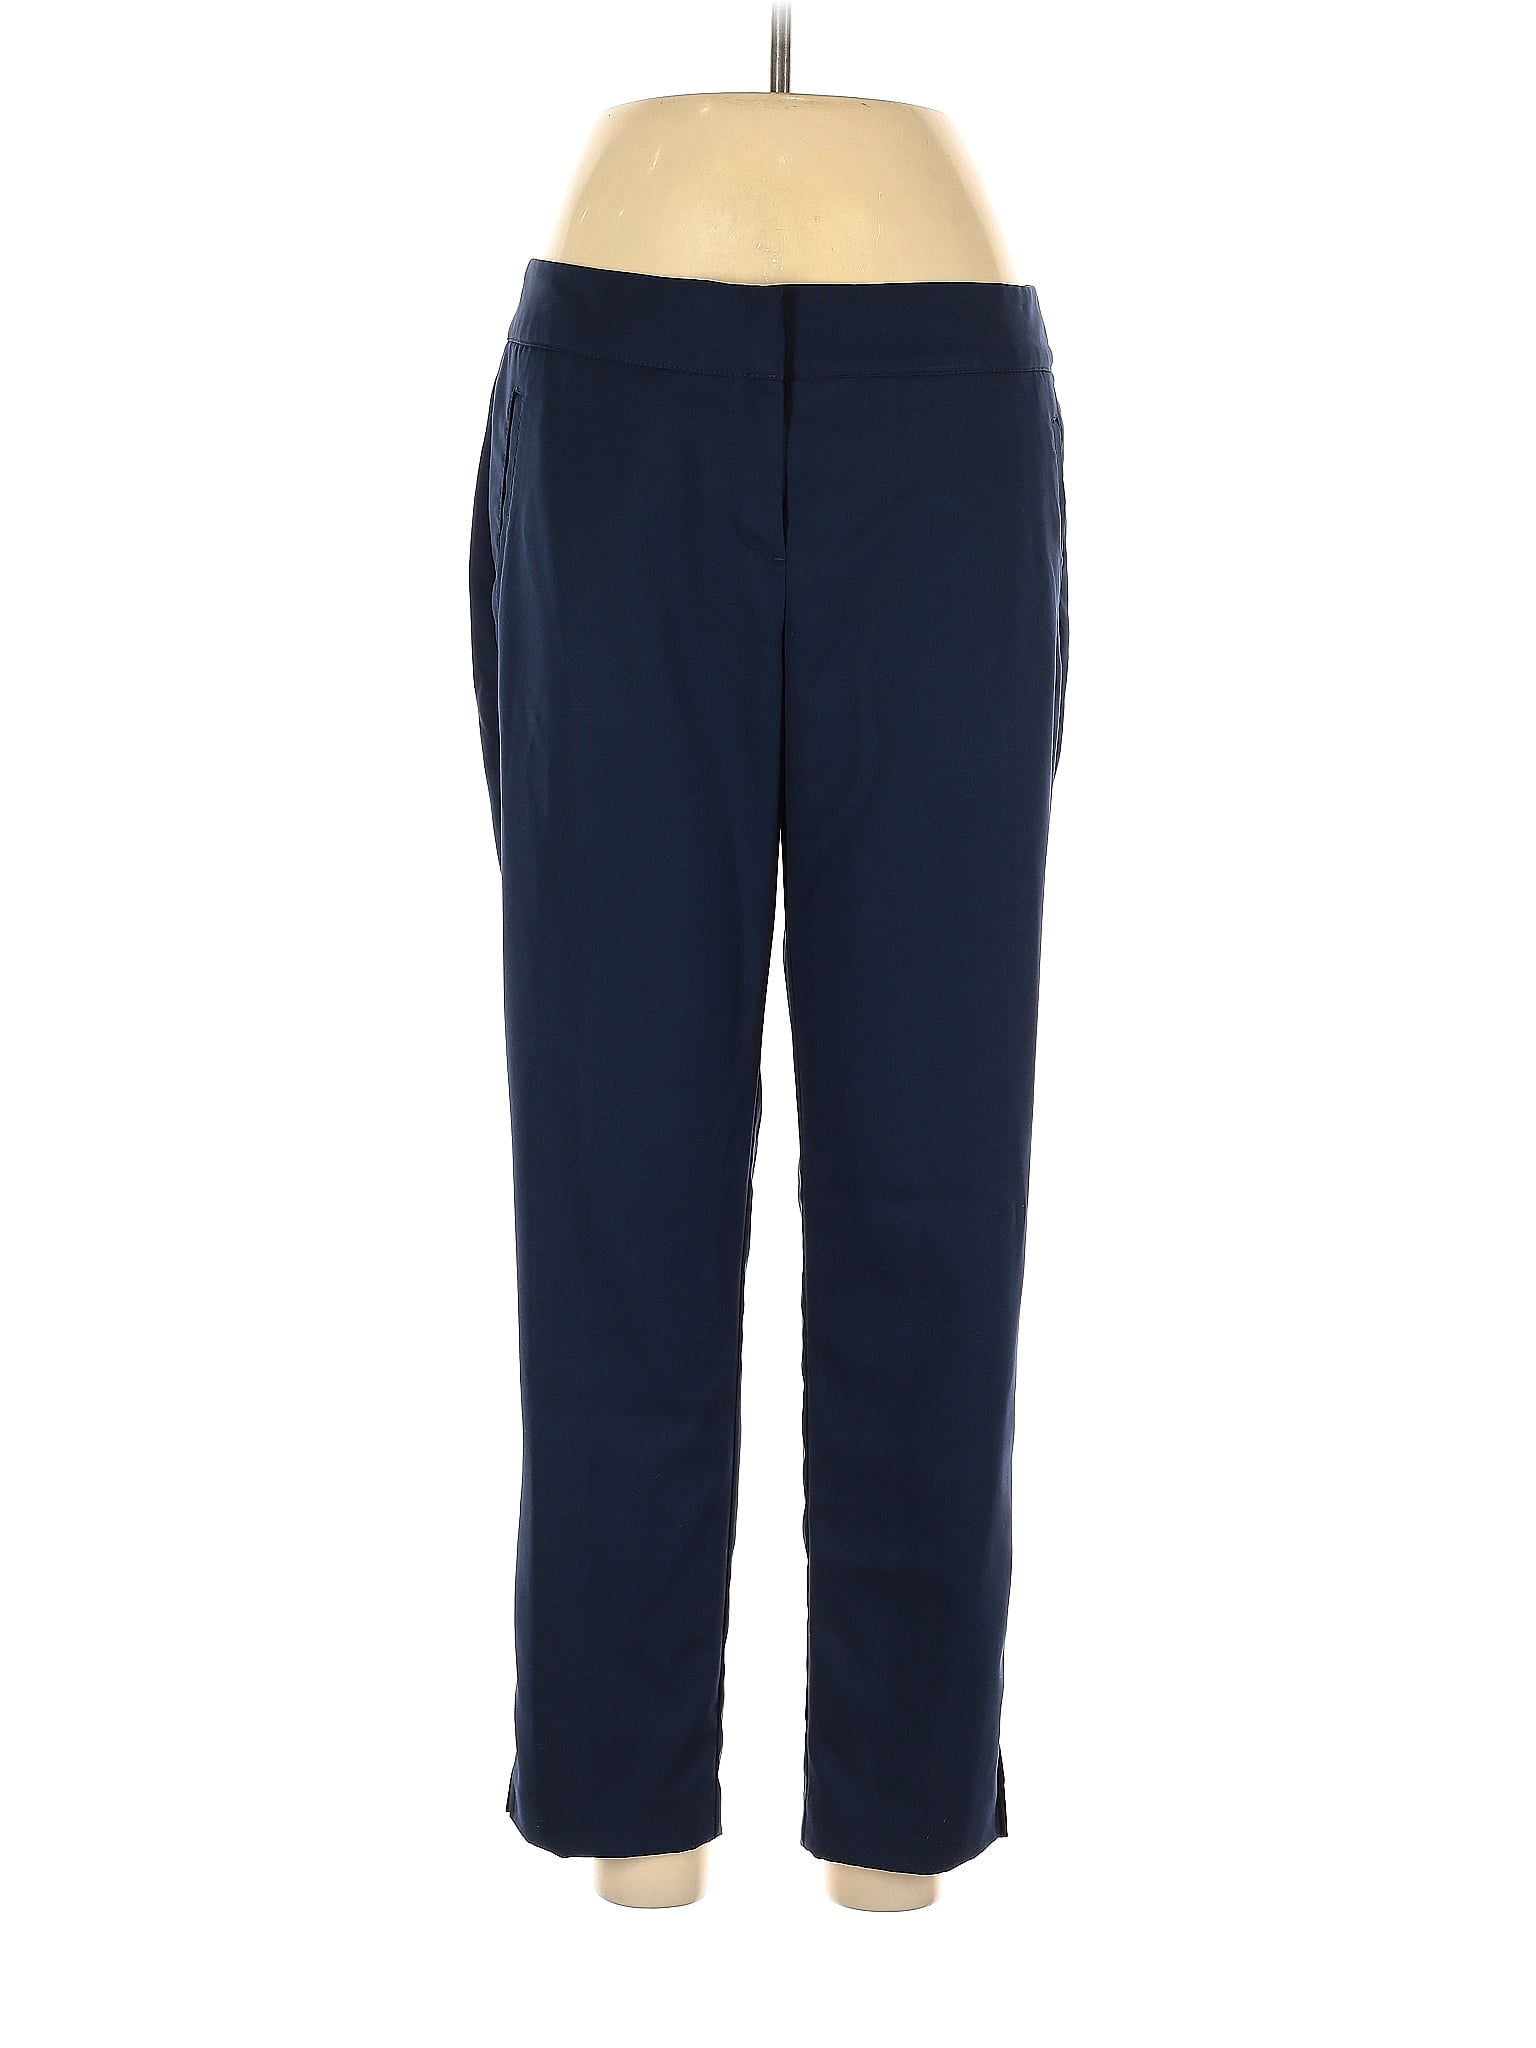 IZOD Solid Navy Blue Sweatpants Size XL - 58% off